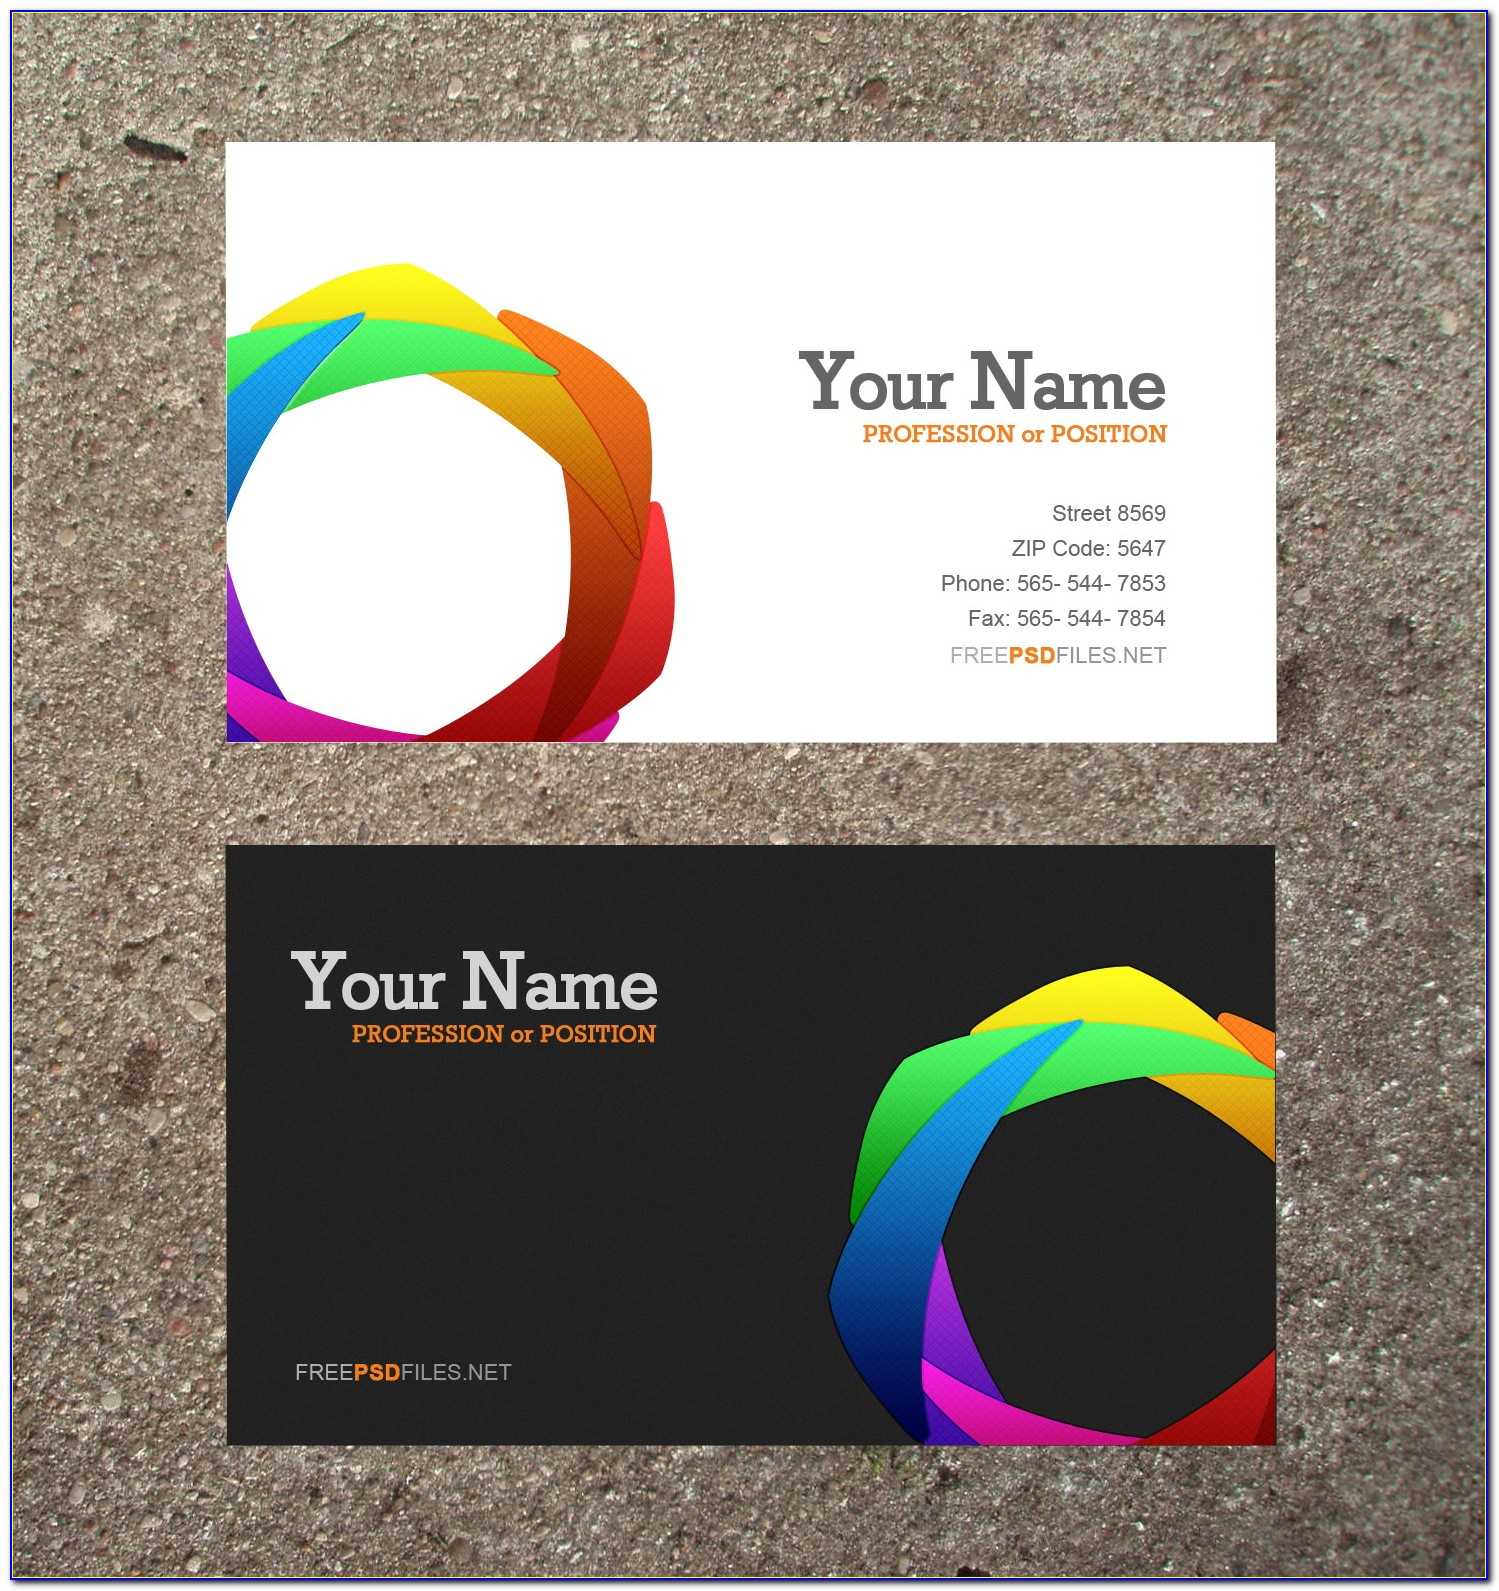 Business Card Design Cdr Format Free Download Within Blank Business Card Template Download